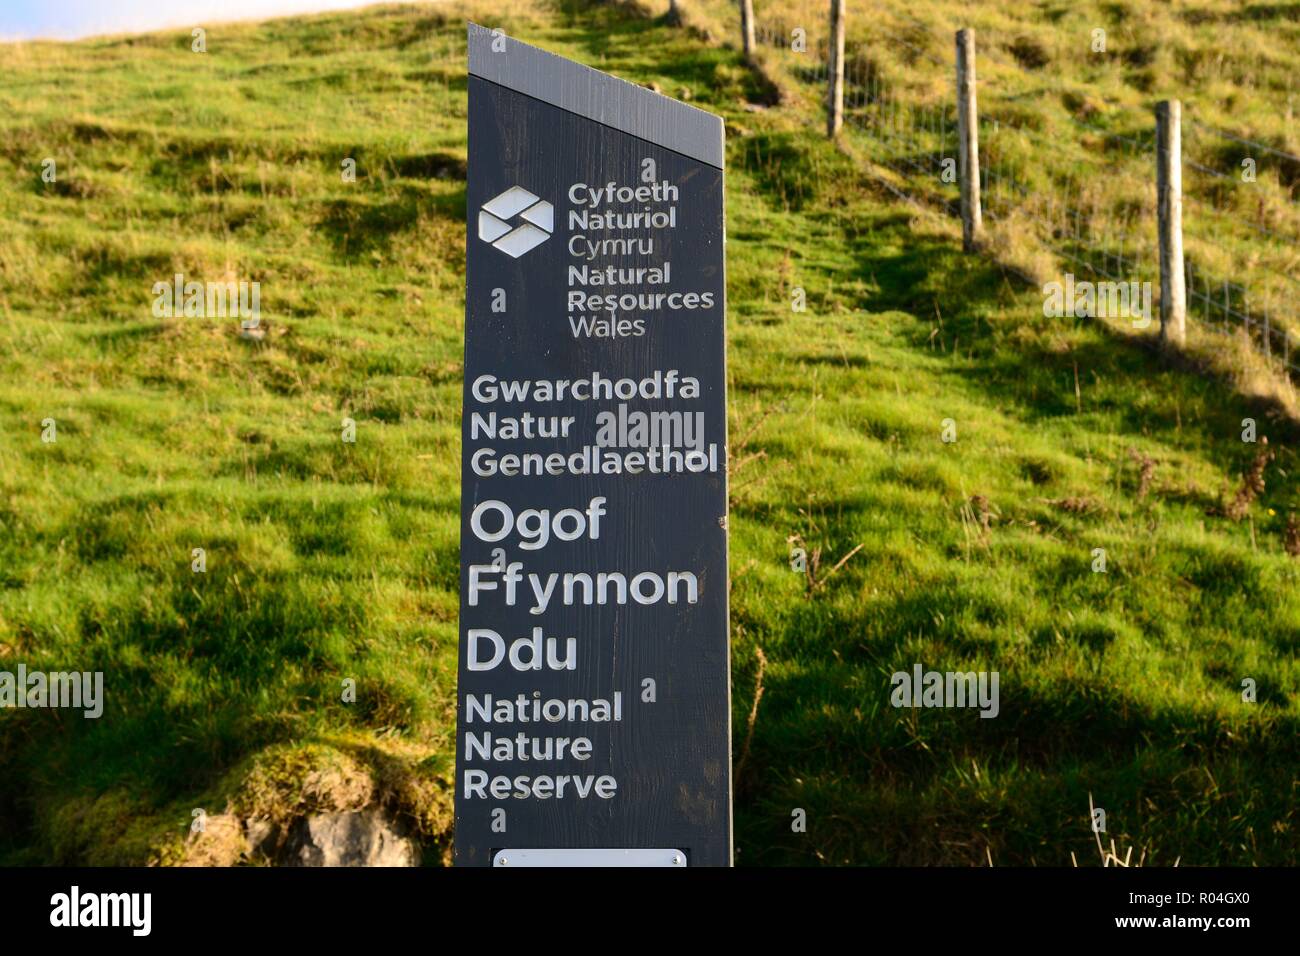 Zeichen für ogof Fynnon Ddu National Nature Reserve Brecon Beacons National Park Fforest Fawr Unseco Geopark Wales cymru GROSSBRITANNIEN Stockfoto